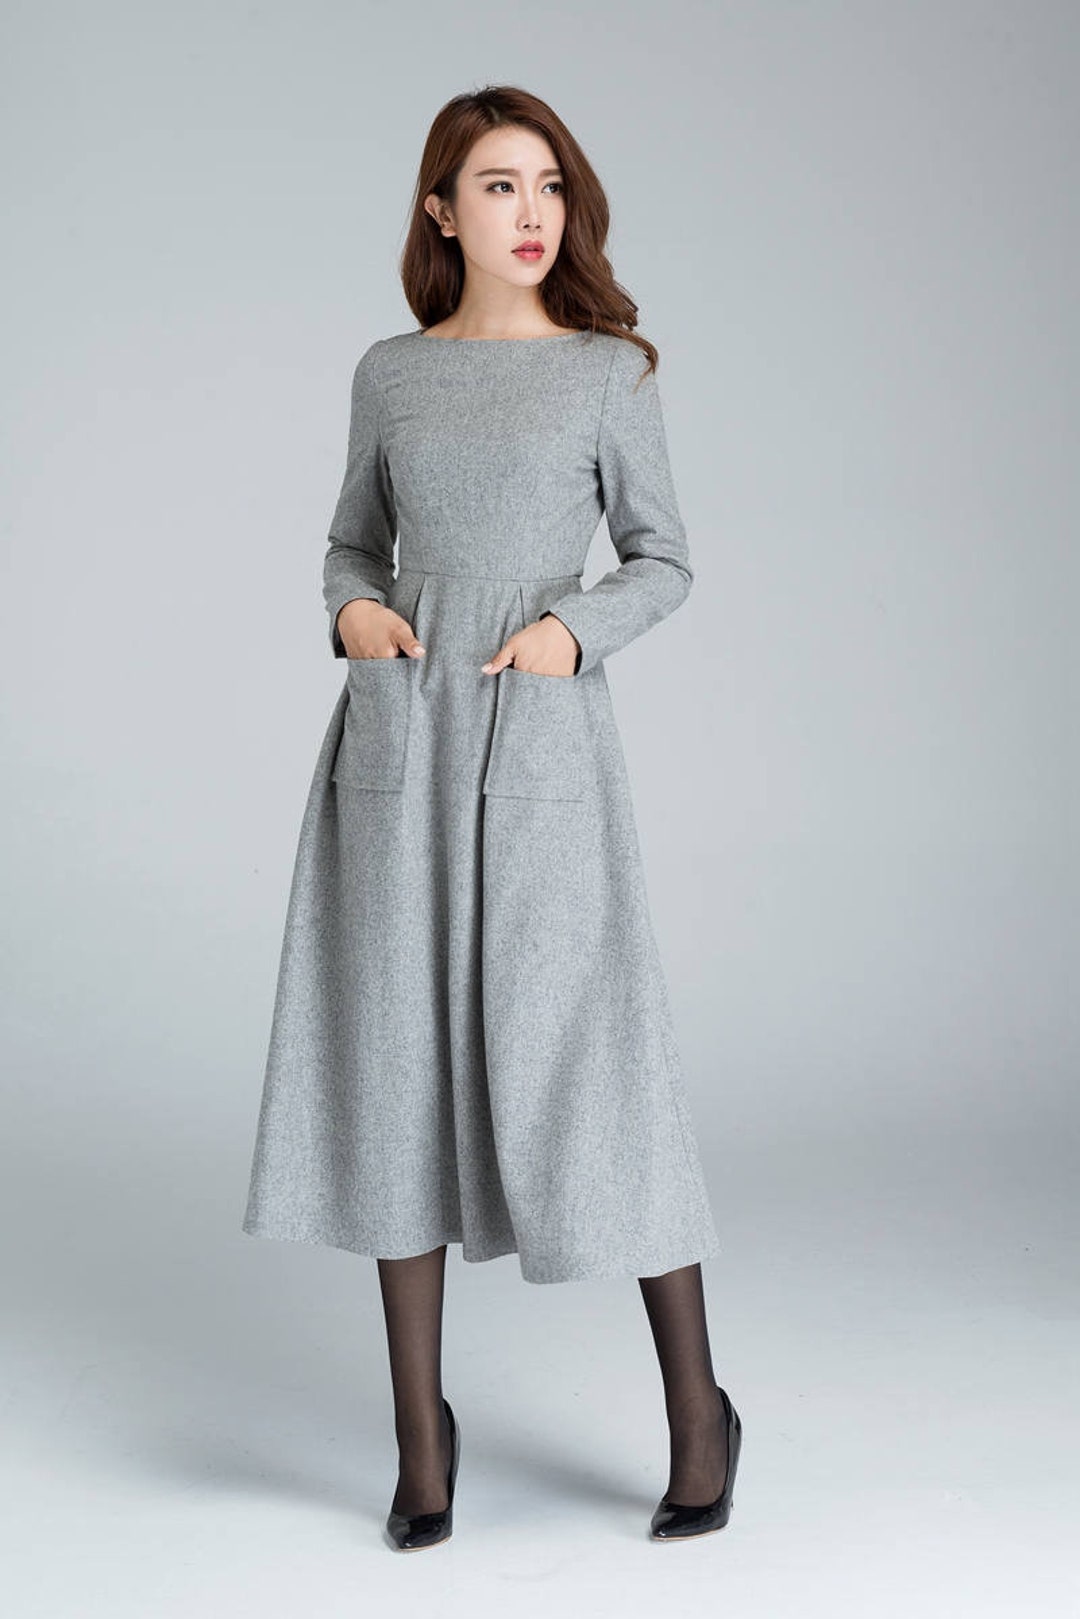 Wool Dress Dress With Pockets Light Grey Dress Winter - Etsy